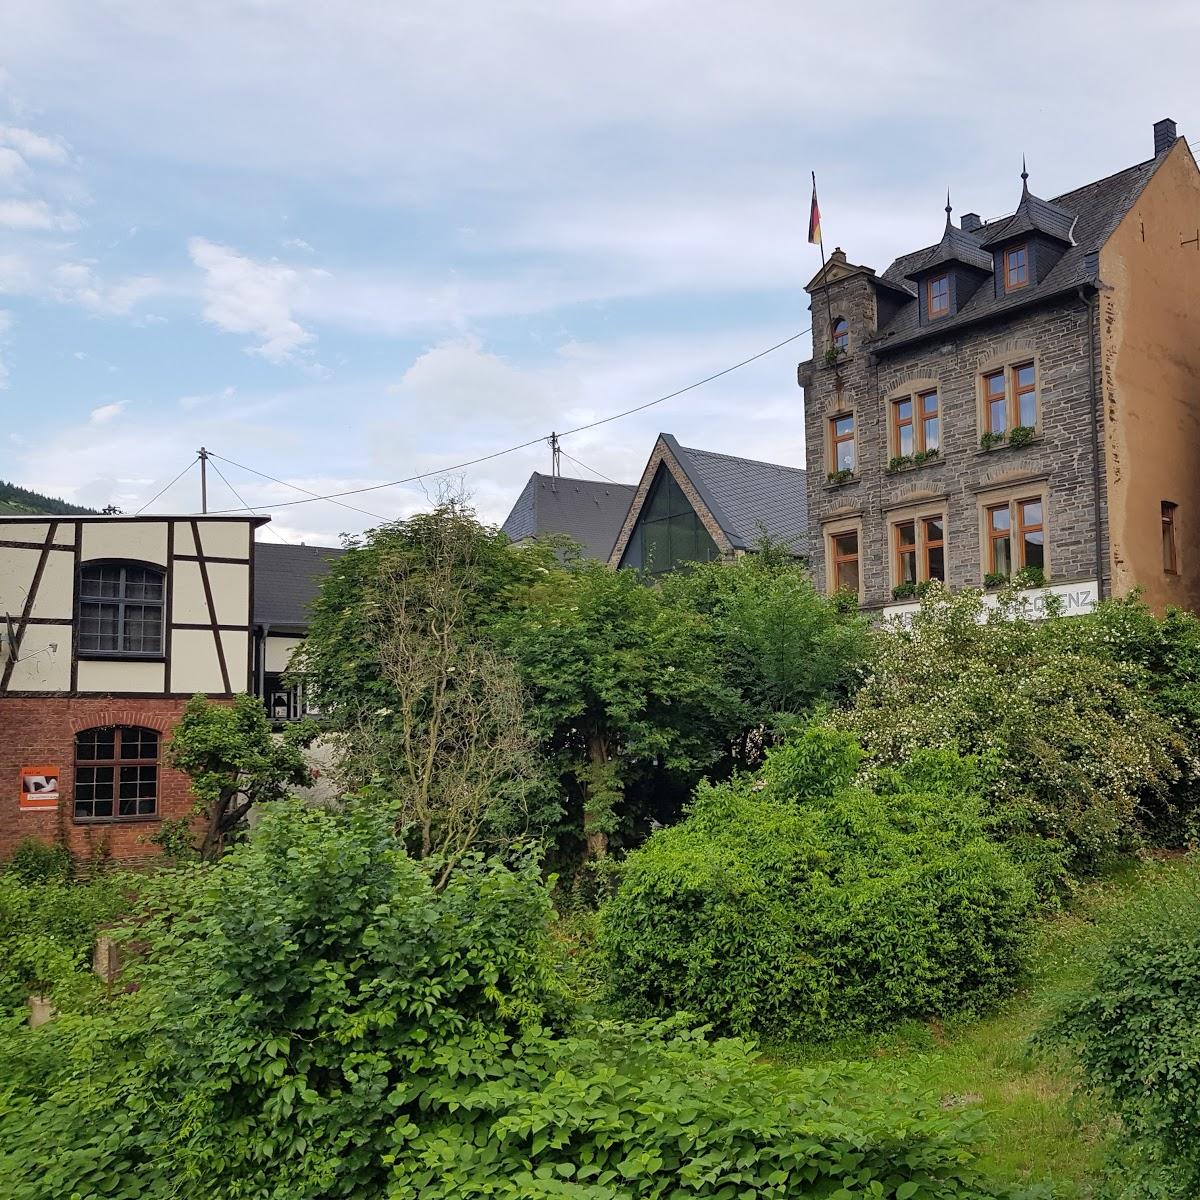 Restaurant "Hotel Loosen" in Enkirch